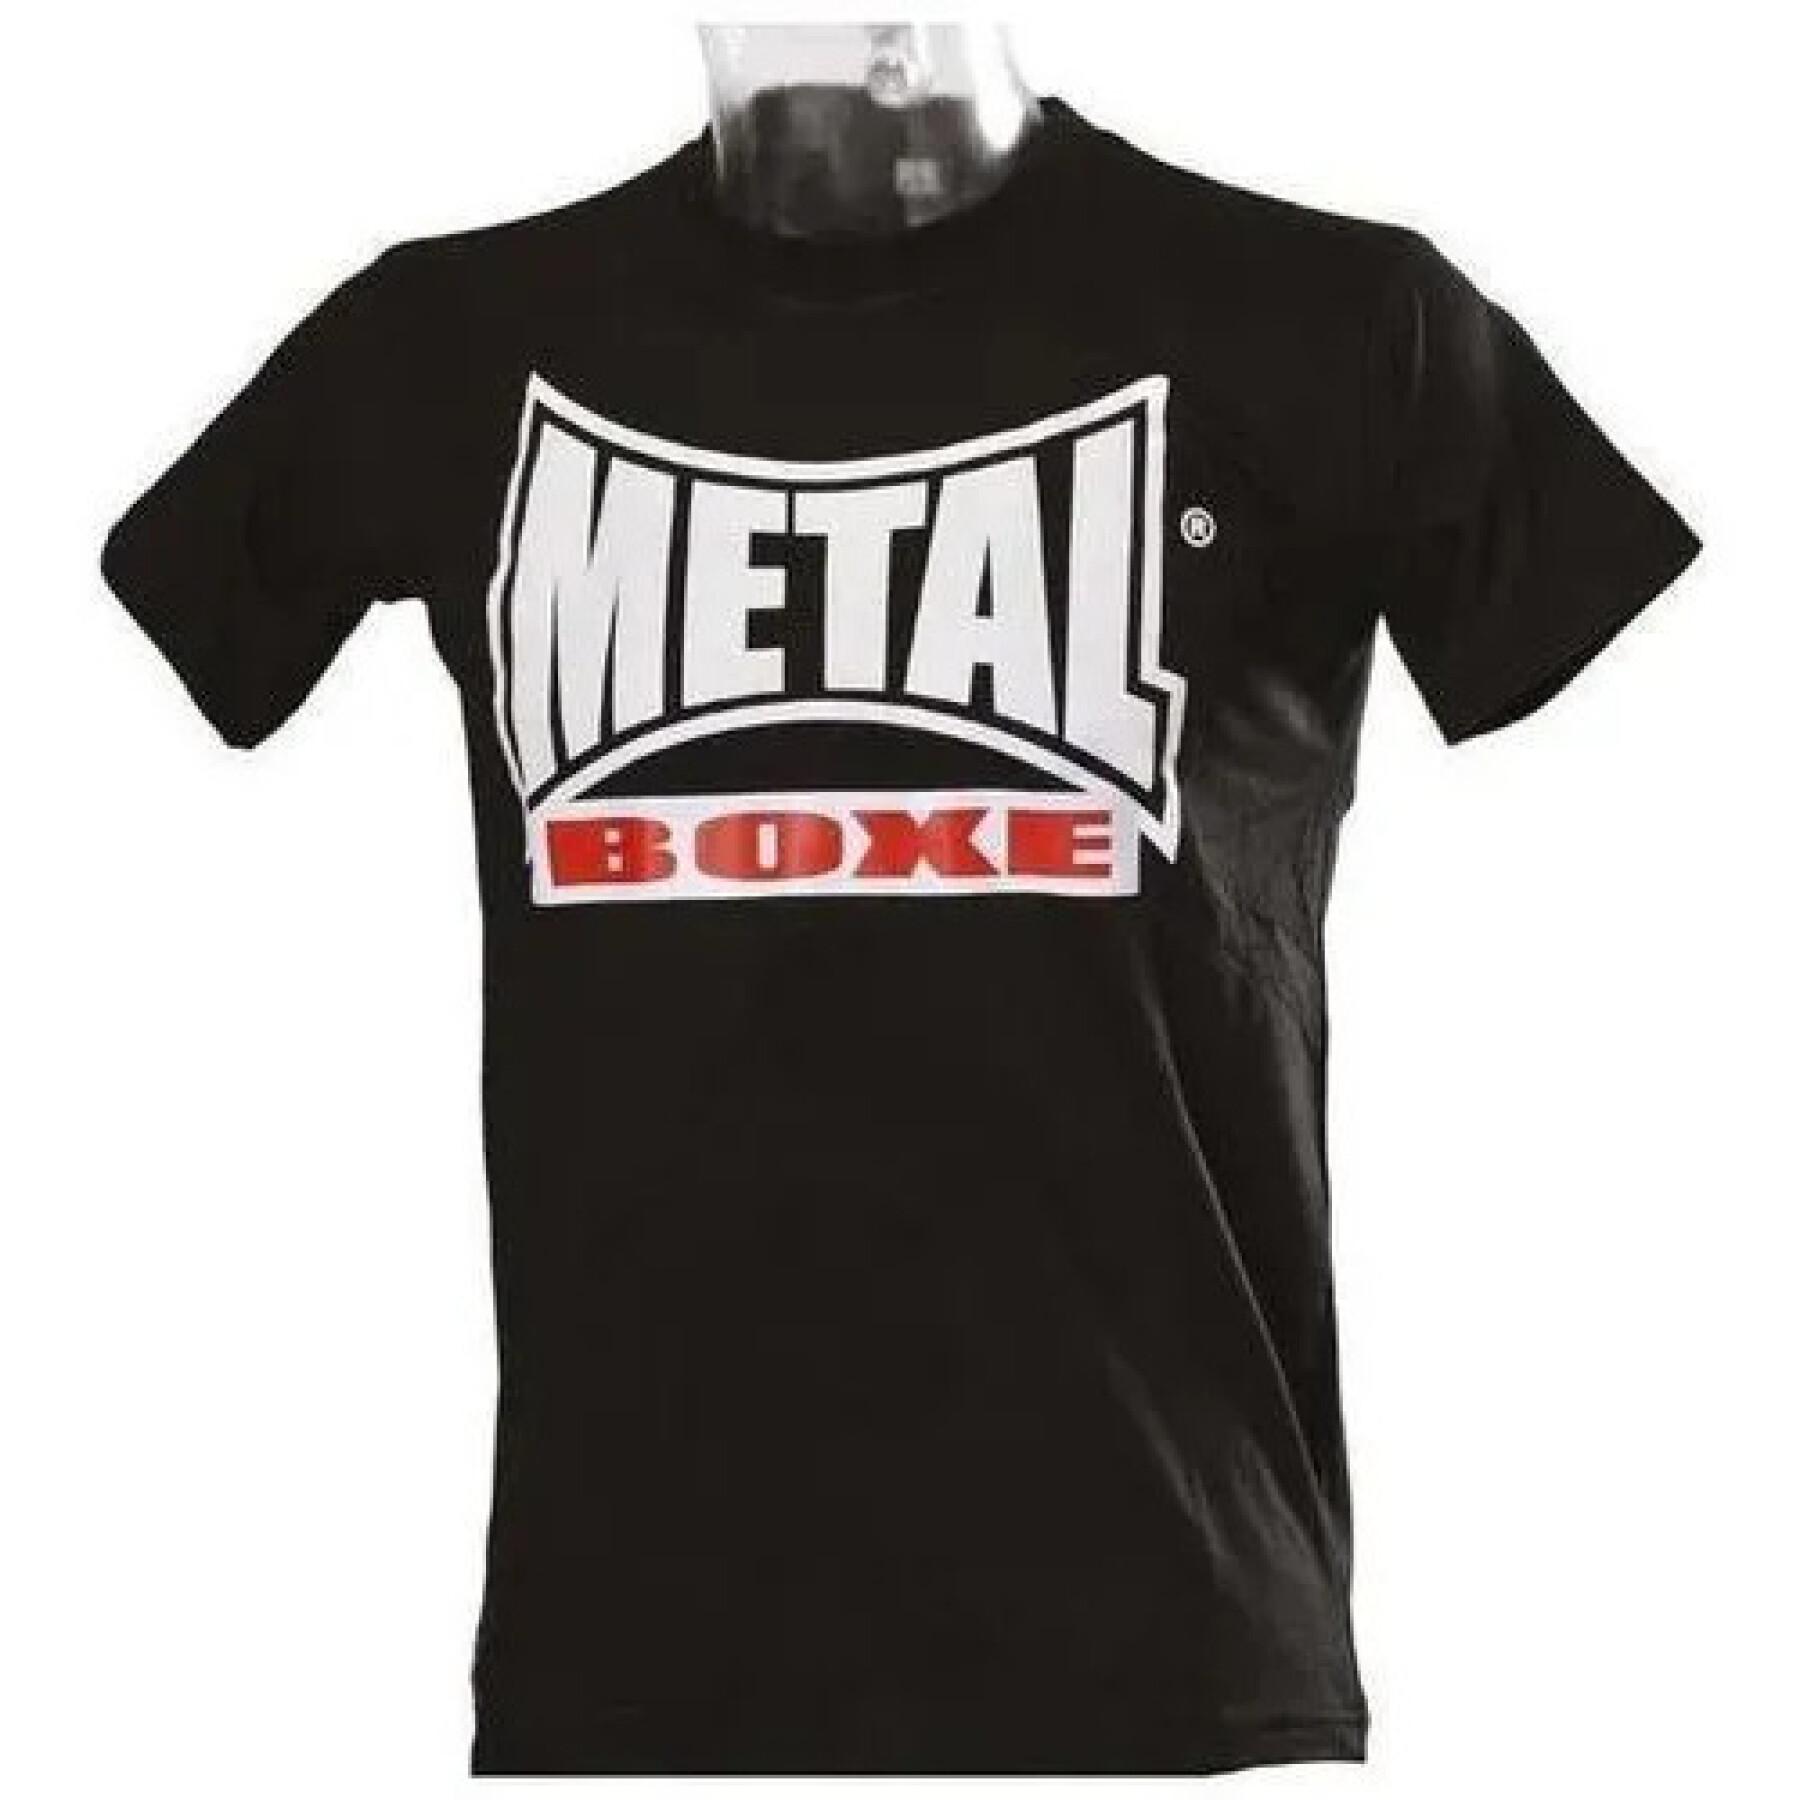 Kurzarm-T-Shirt Metal Boxe vintage